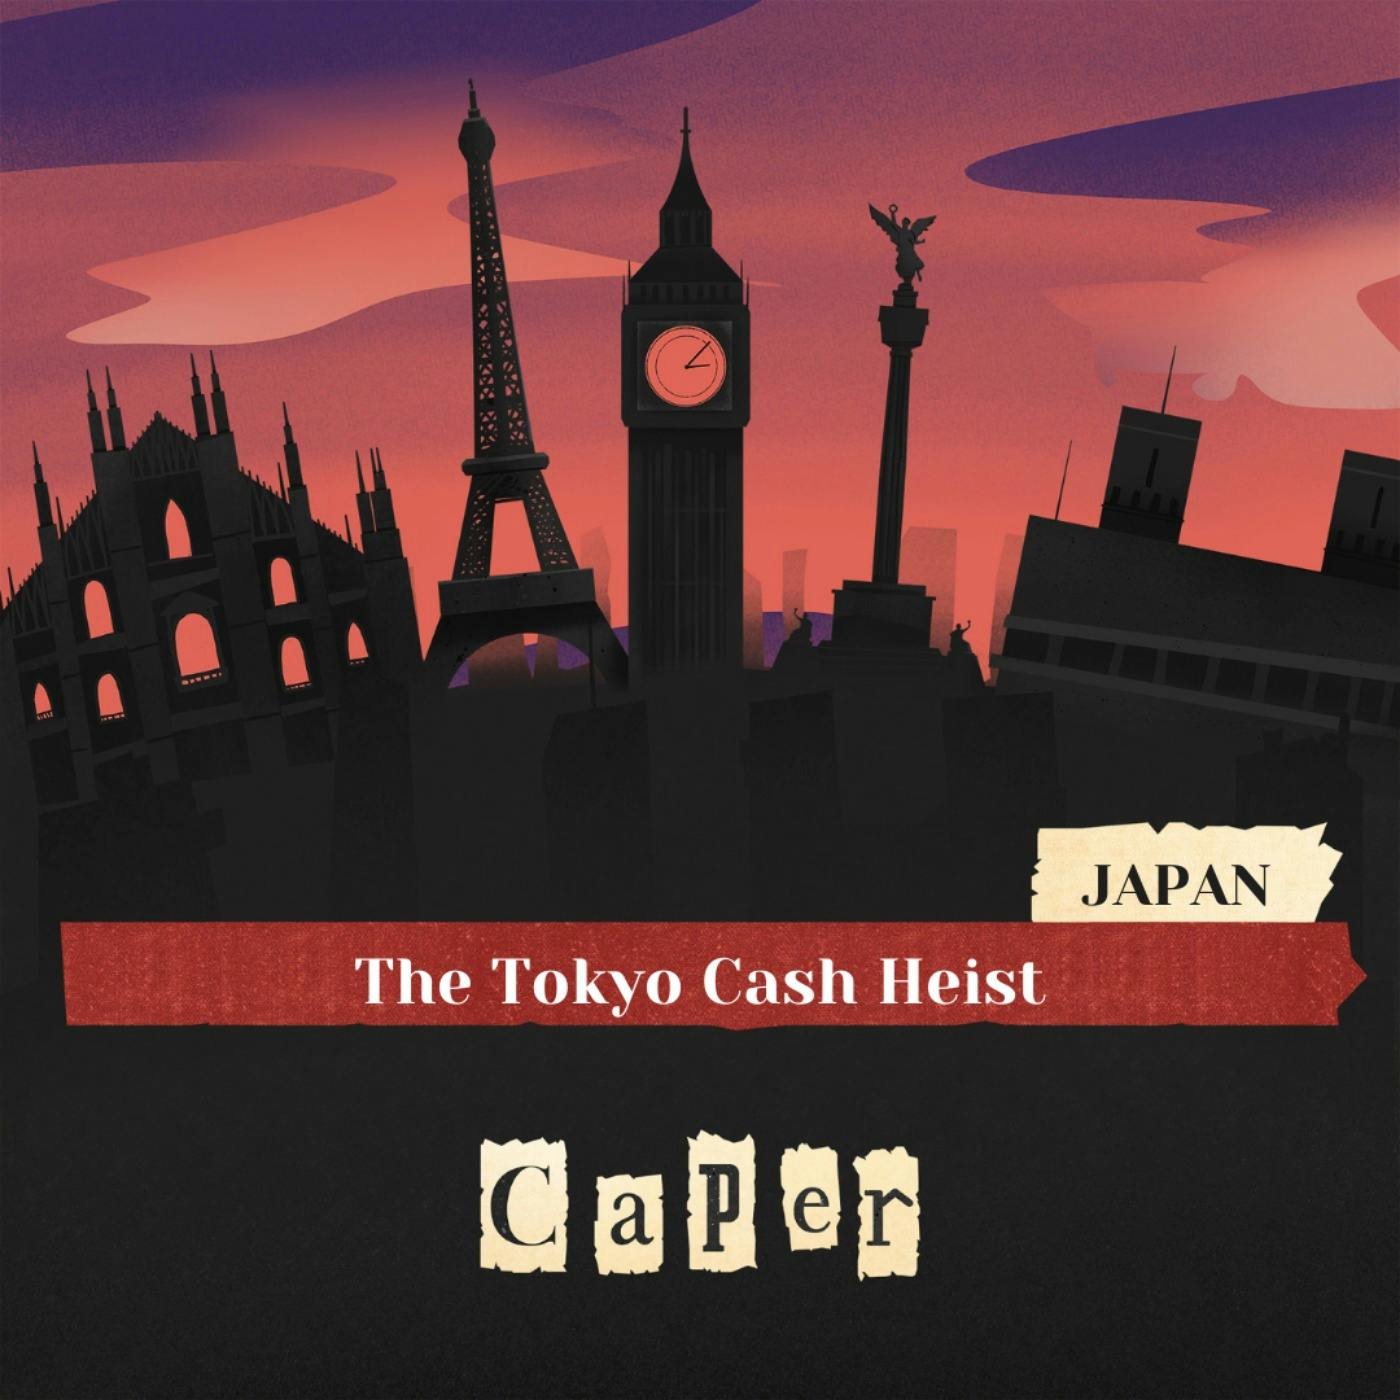 The Tokyo Cash Heist